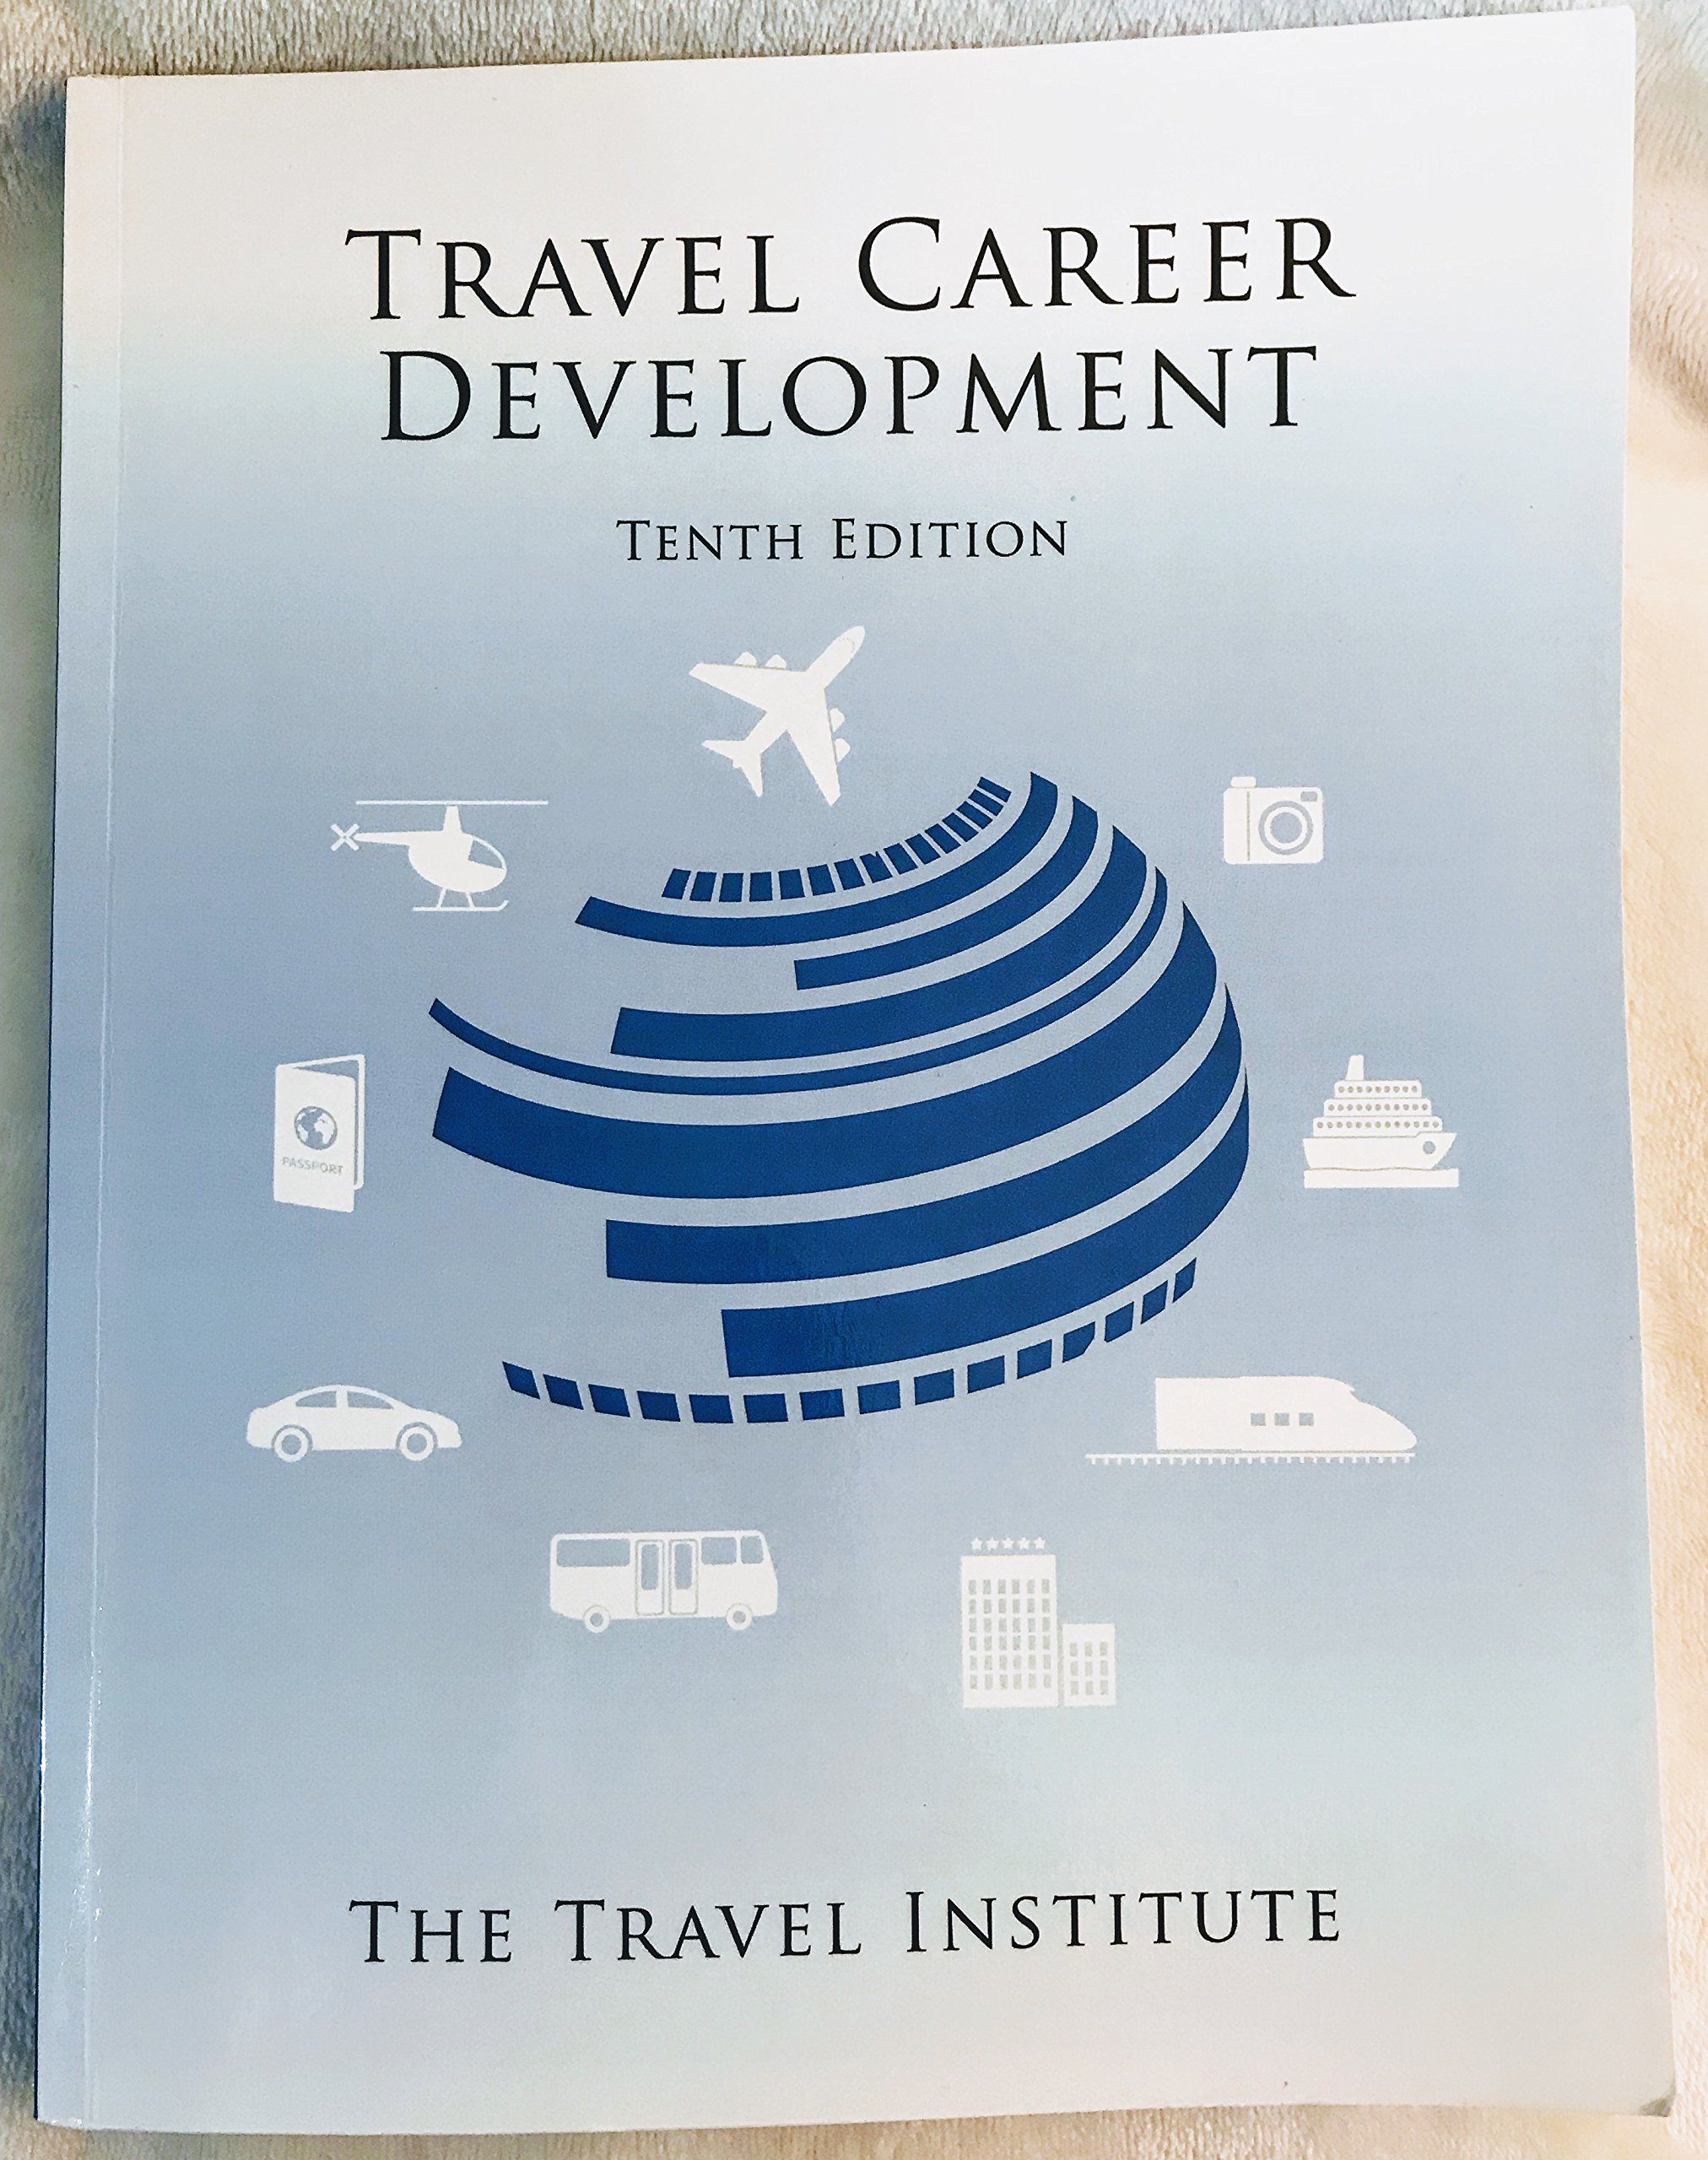 Global travel institute professional development